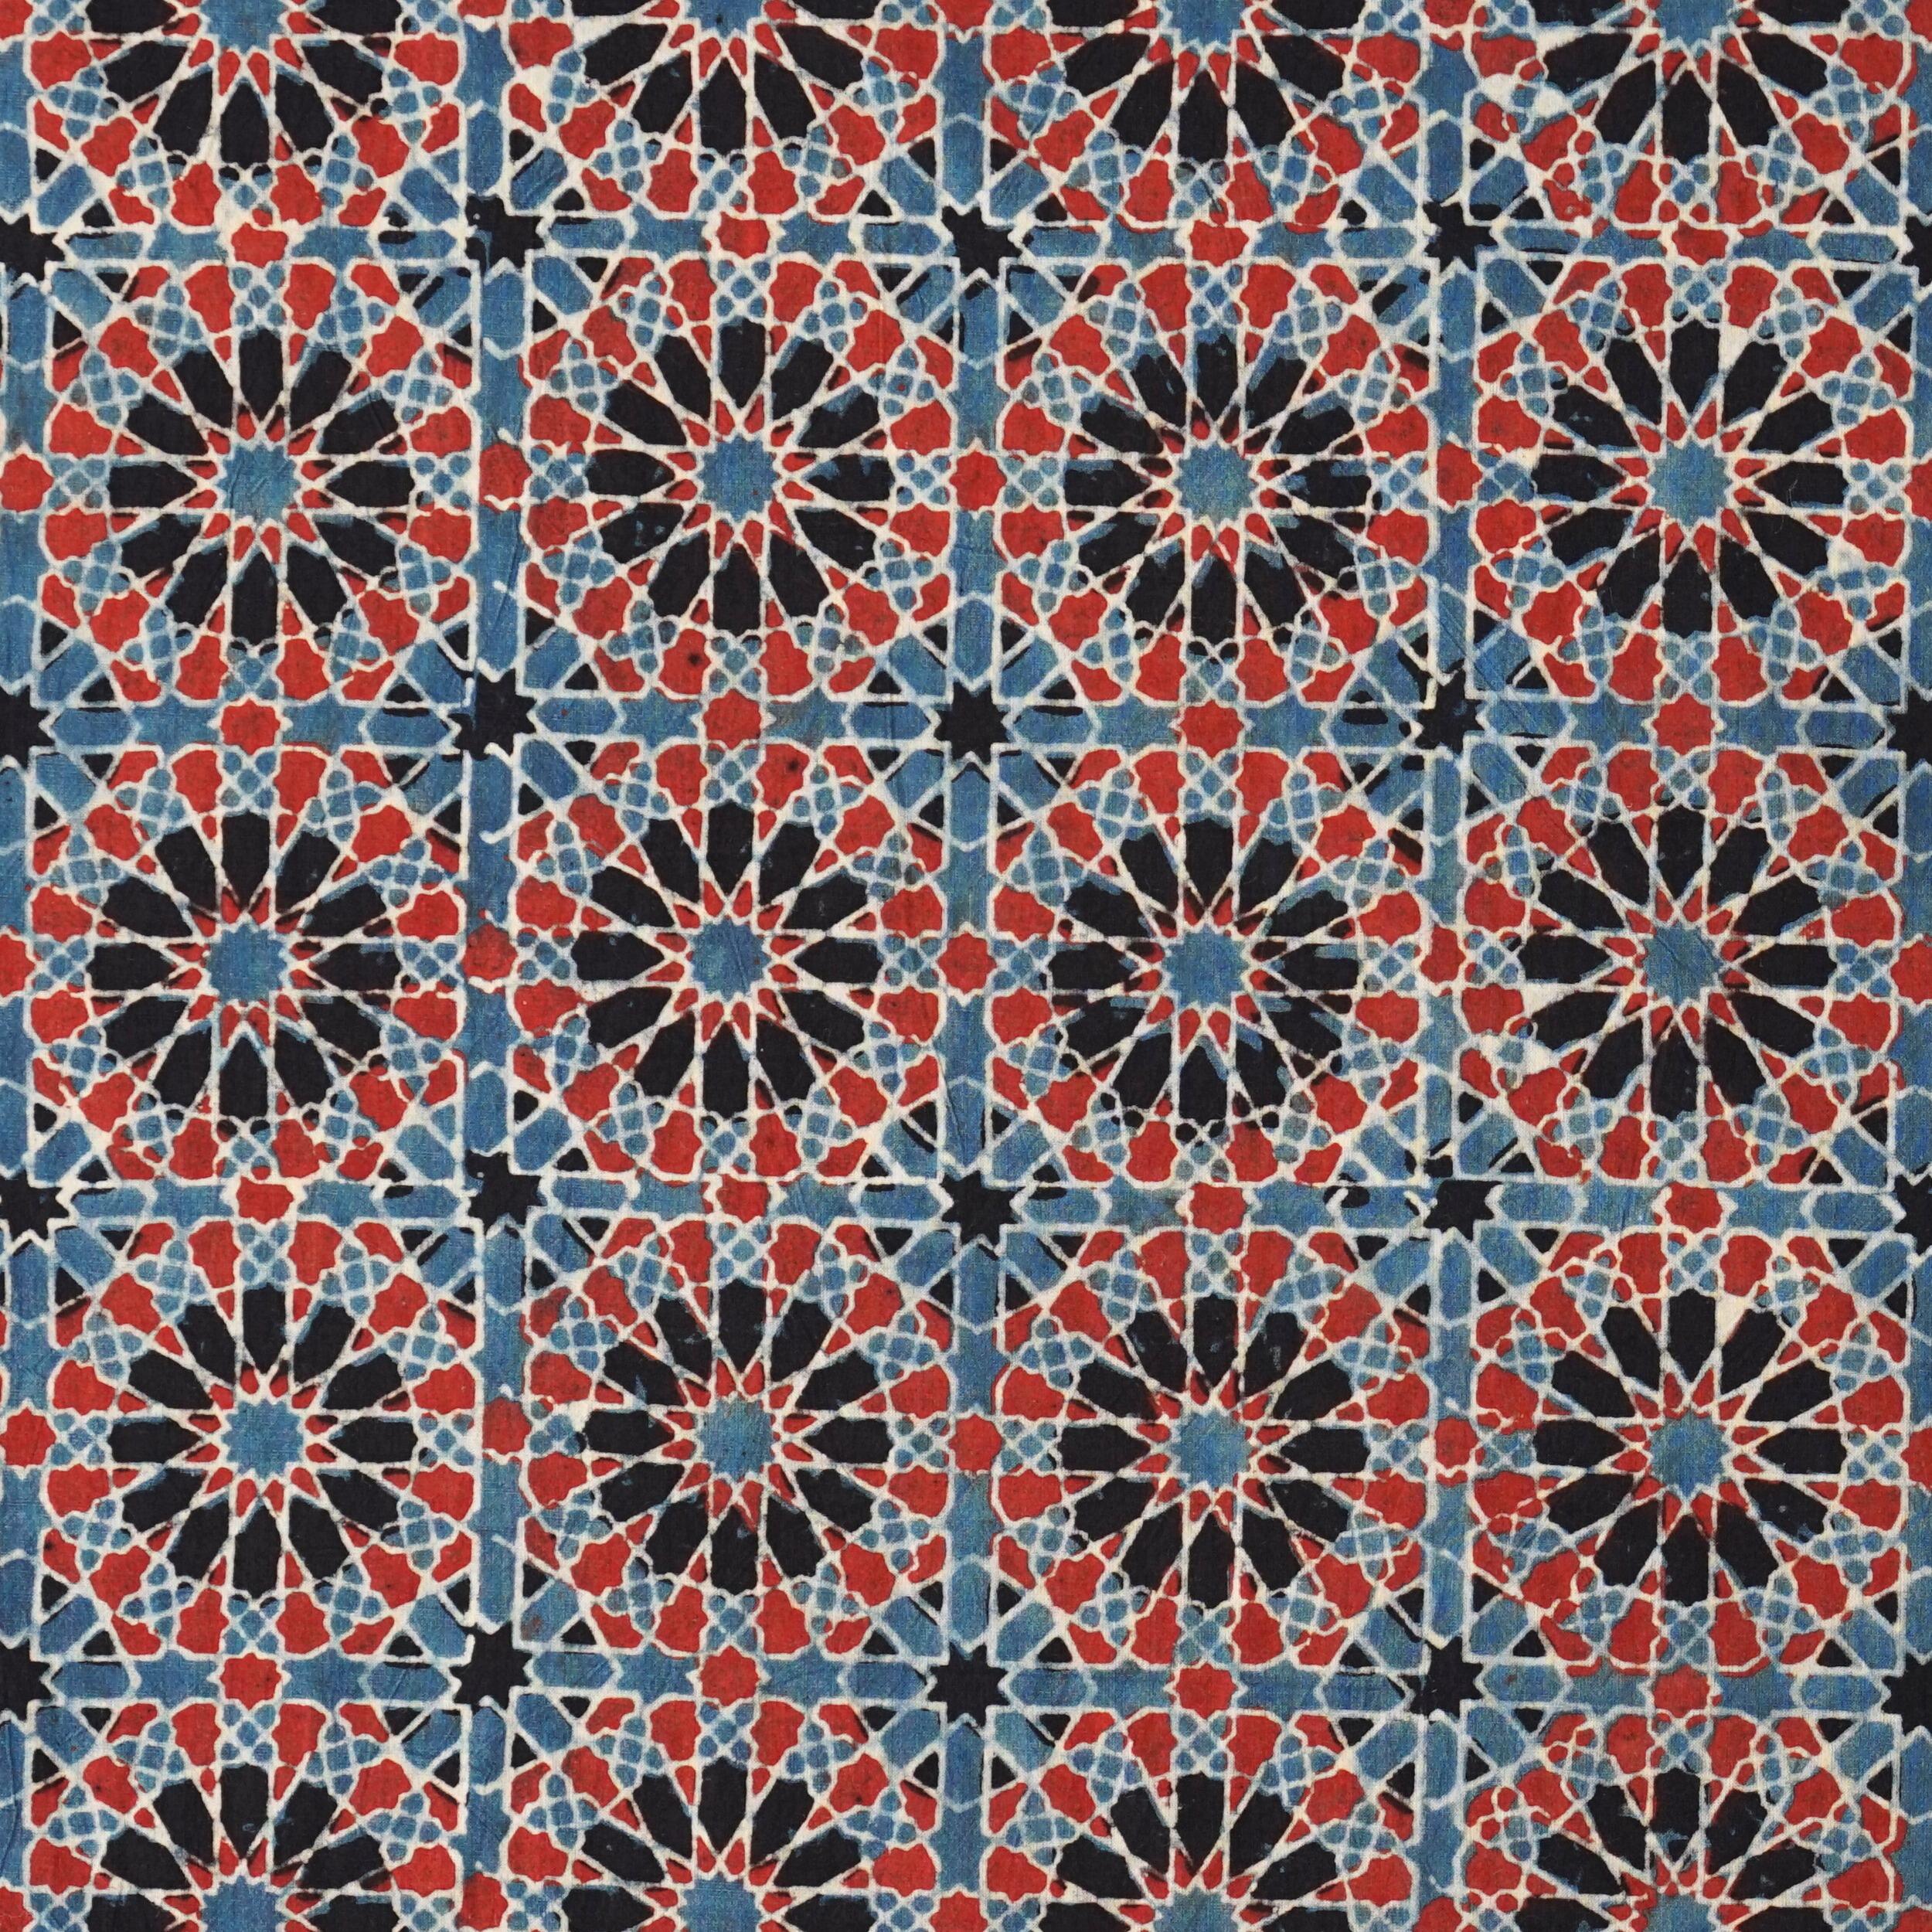 SIK09 - Indian Block Printed Cotton Fabric - Ajrak - Indigo, Alizarin Red, Iron Black, White Resist Web - Flat